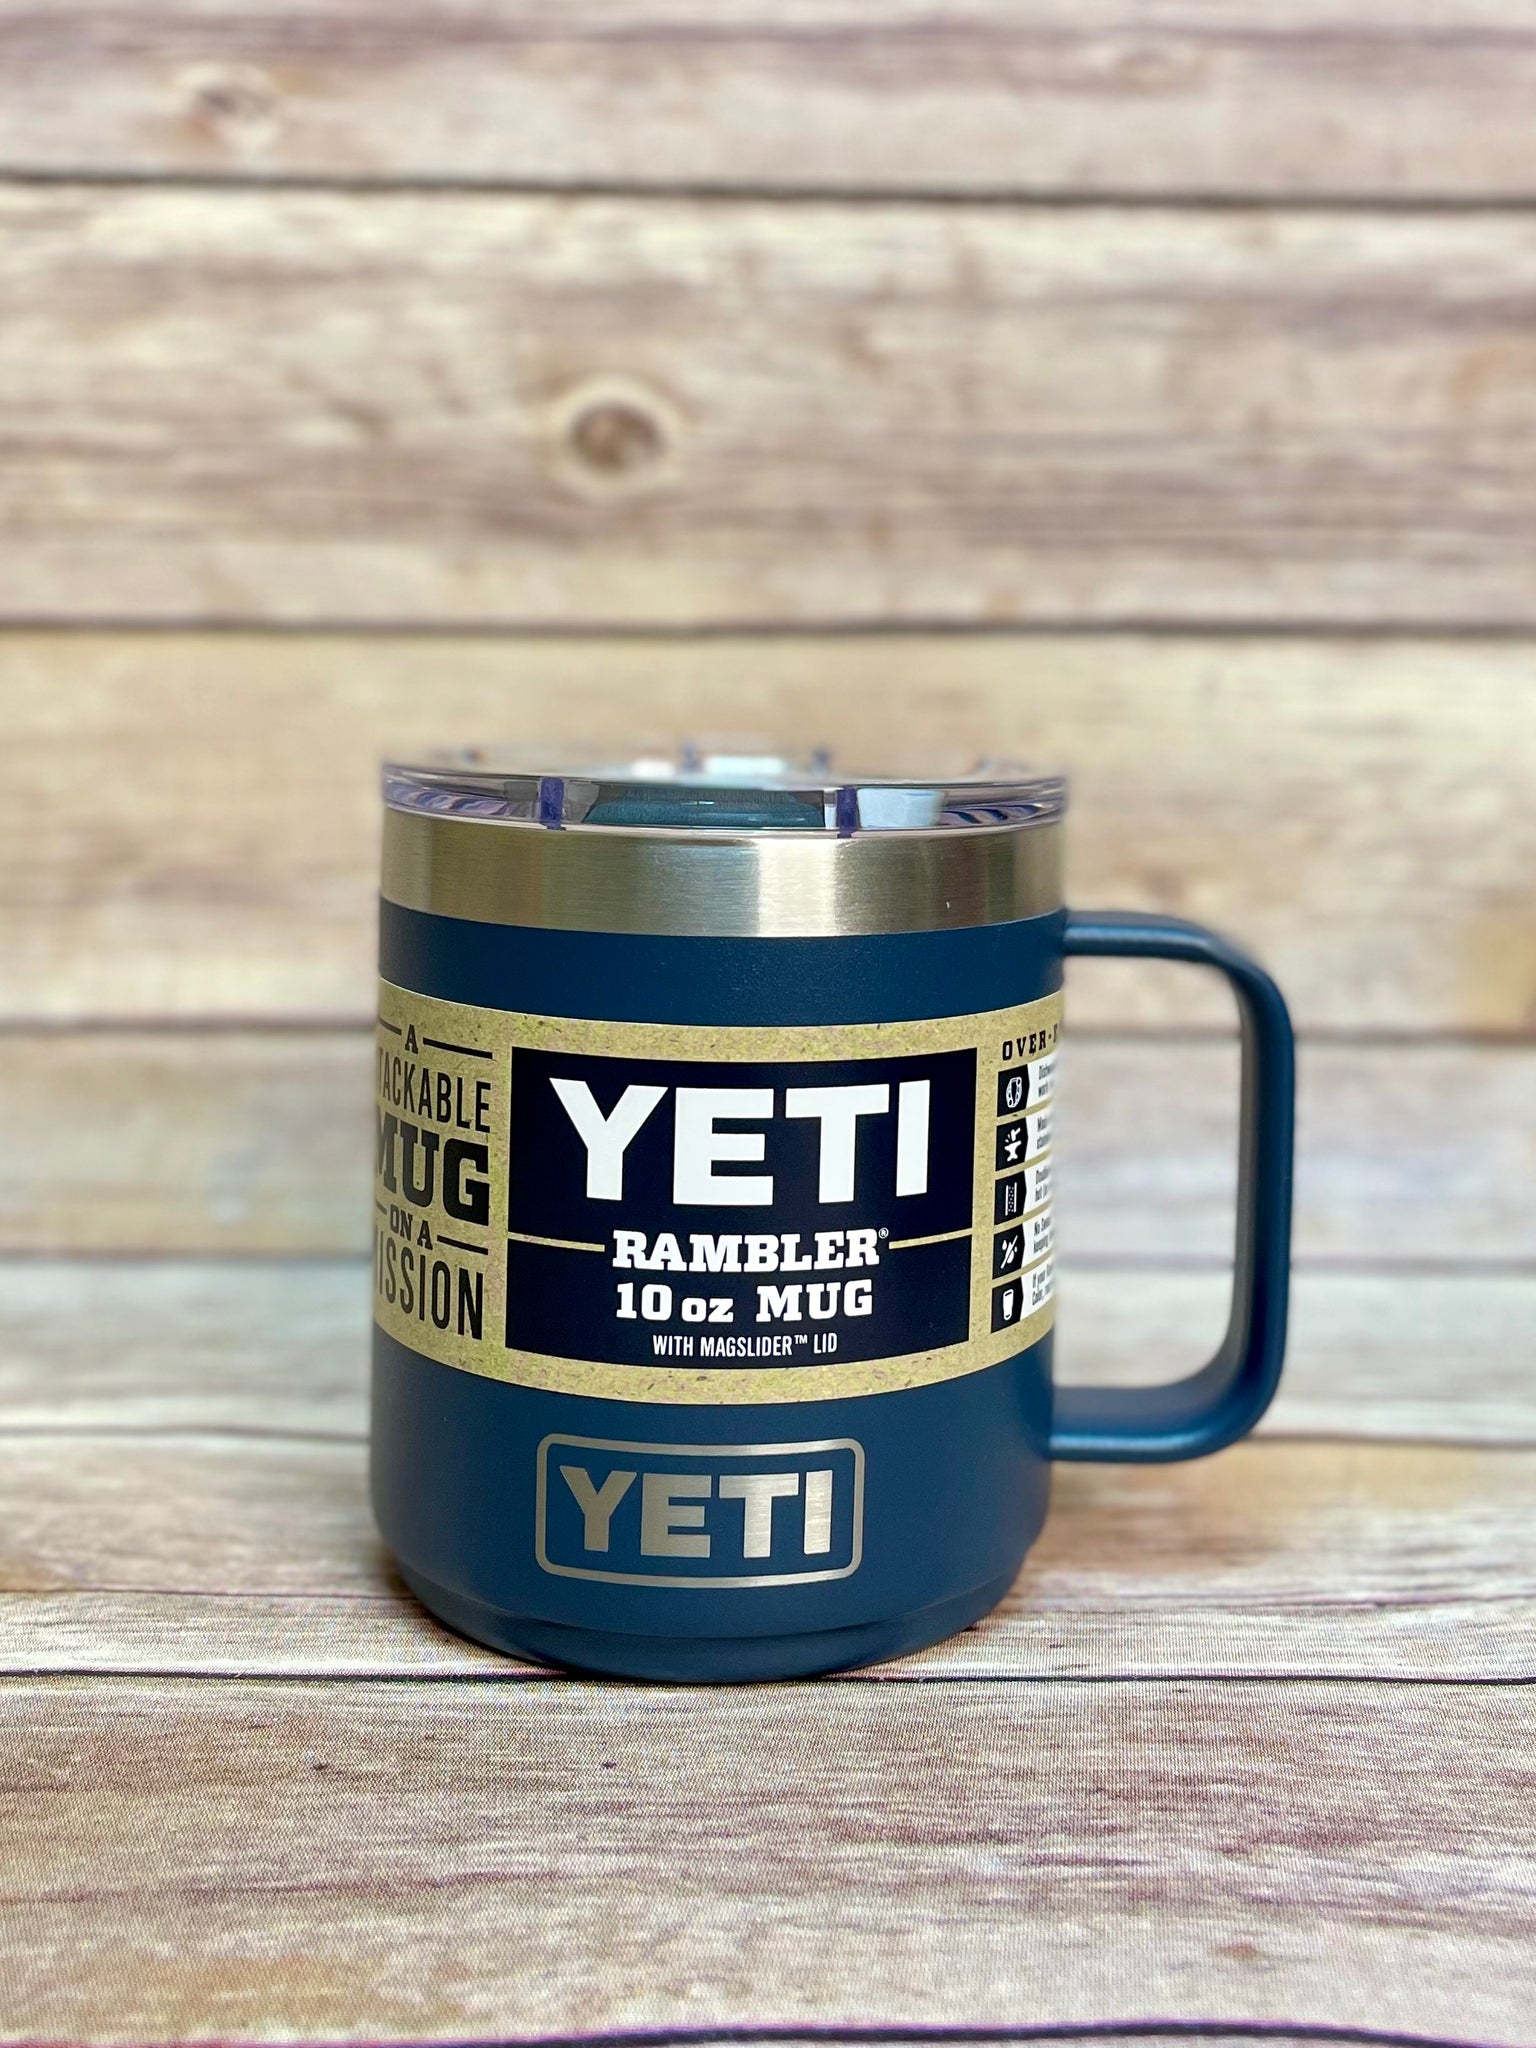 Yeti Company Logo Rambler 14 oz Mug | Black Rifle Coffee Company